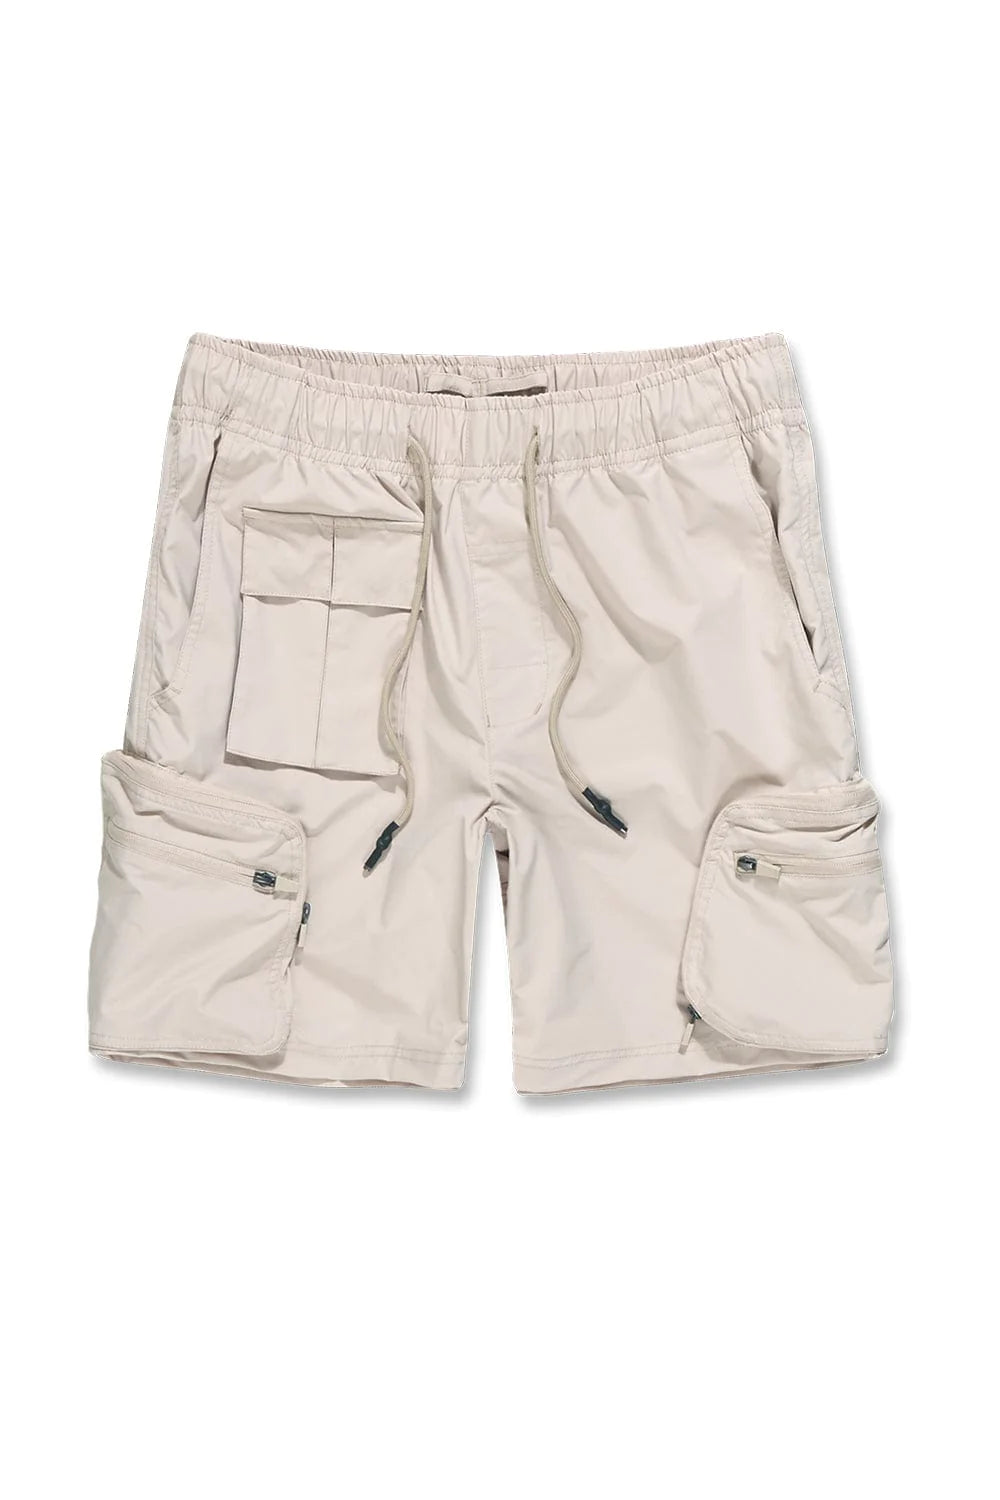 “NEW” Jordan Craig Retro Cargo Shorts (Khaki)